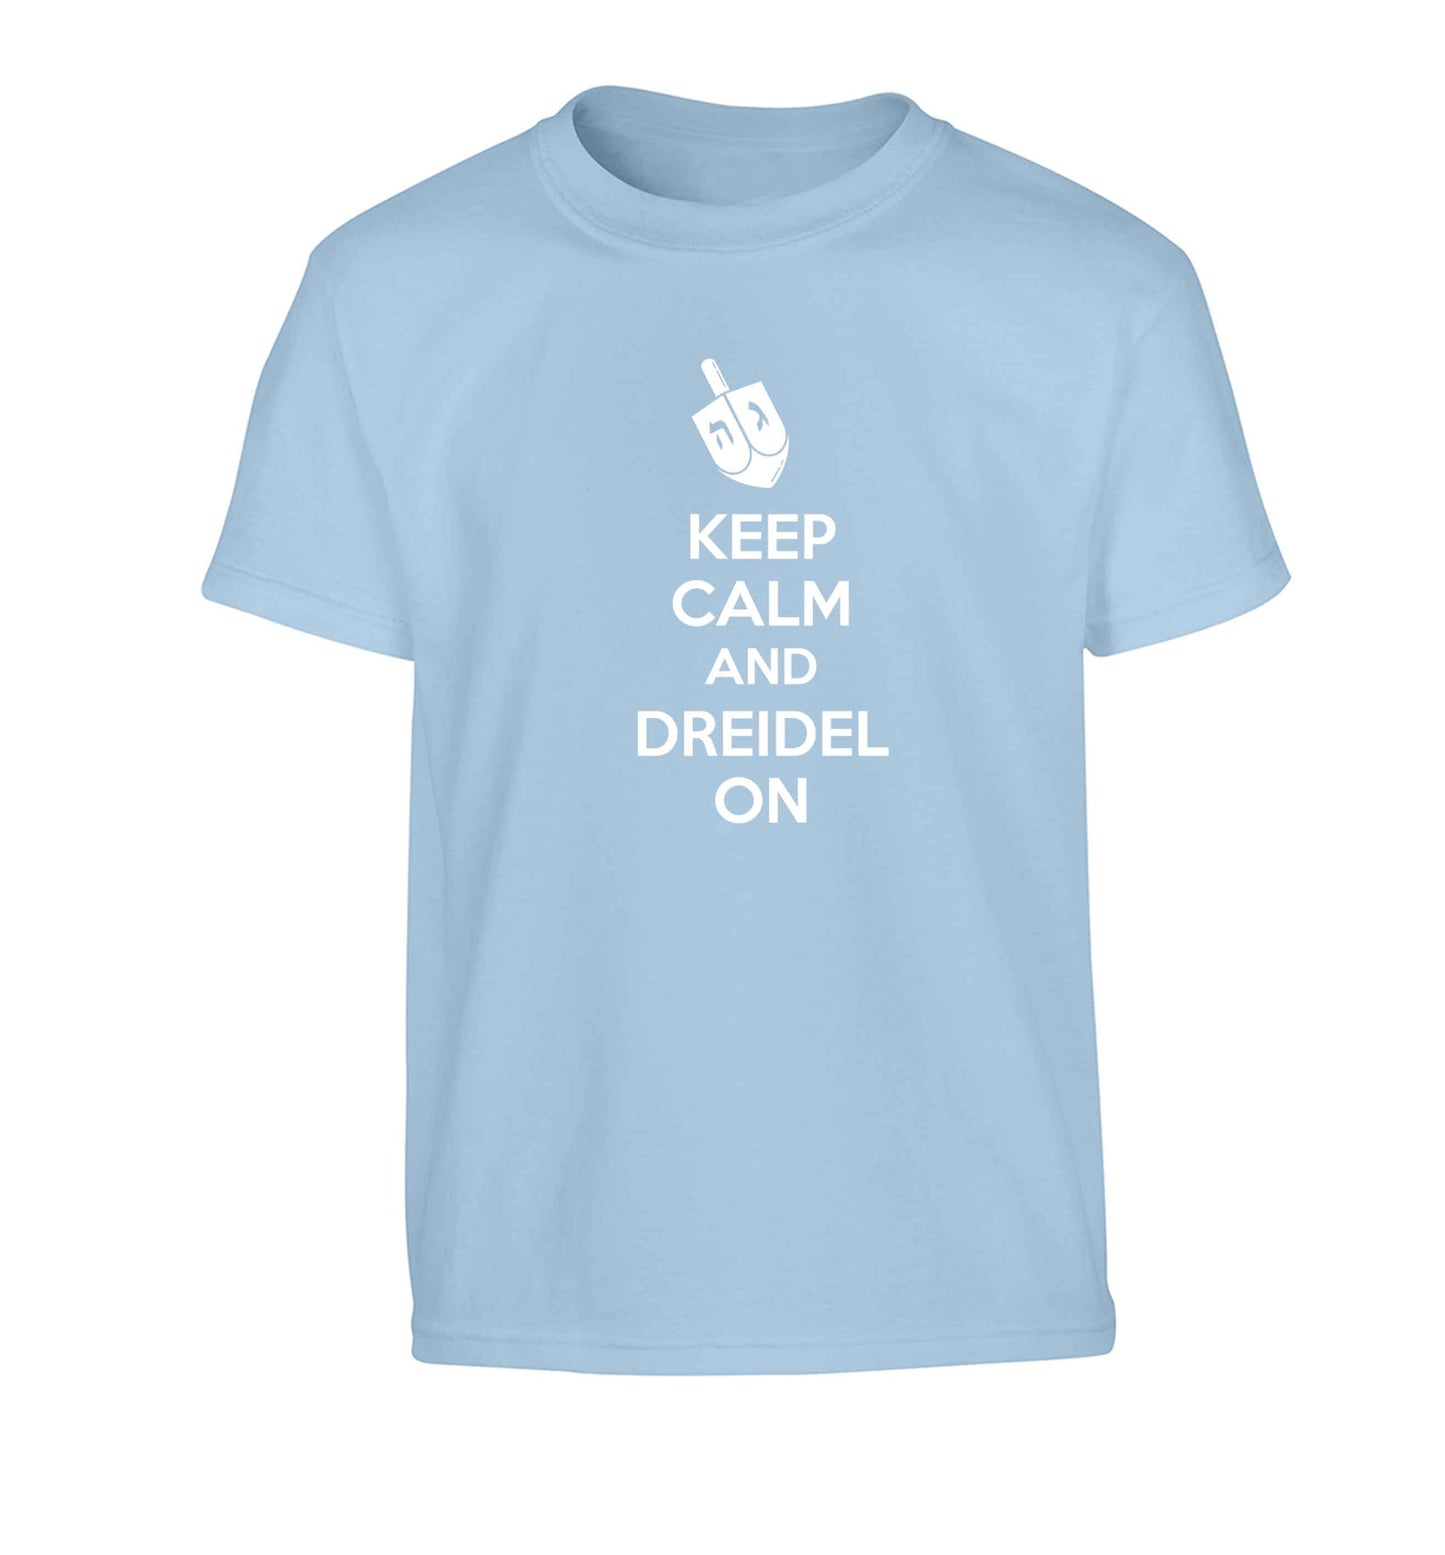 Keep calm and dreidel on Children's light blue Tshirt 12-13 Years